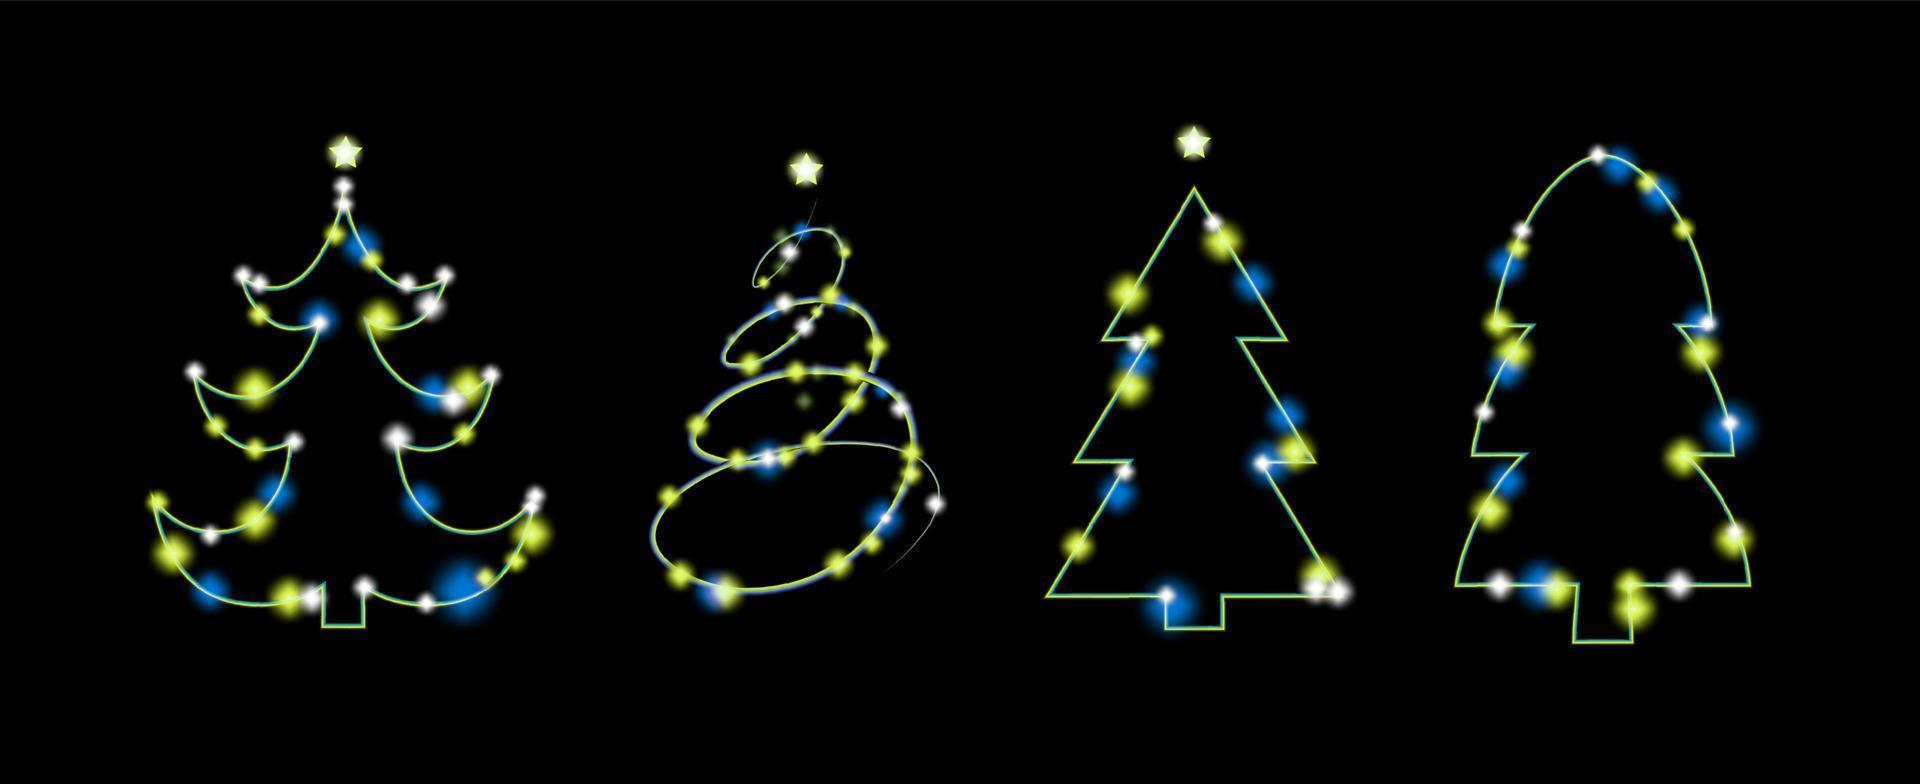 oekraïens Kerstmis bomen. lineair illustratie van een gloeiend Kerstmis boom. geel blauw kleuren. slinger in oekraïens kleuren. Kerstmis boom vector